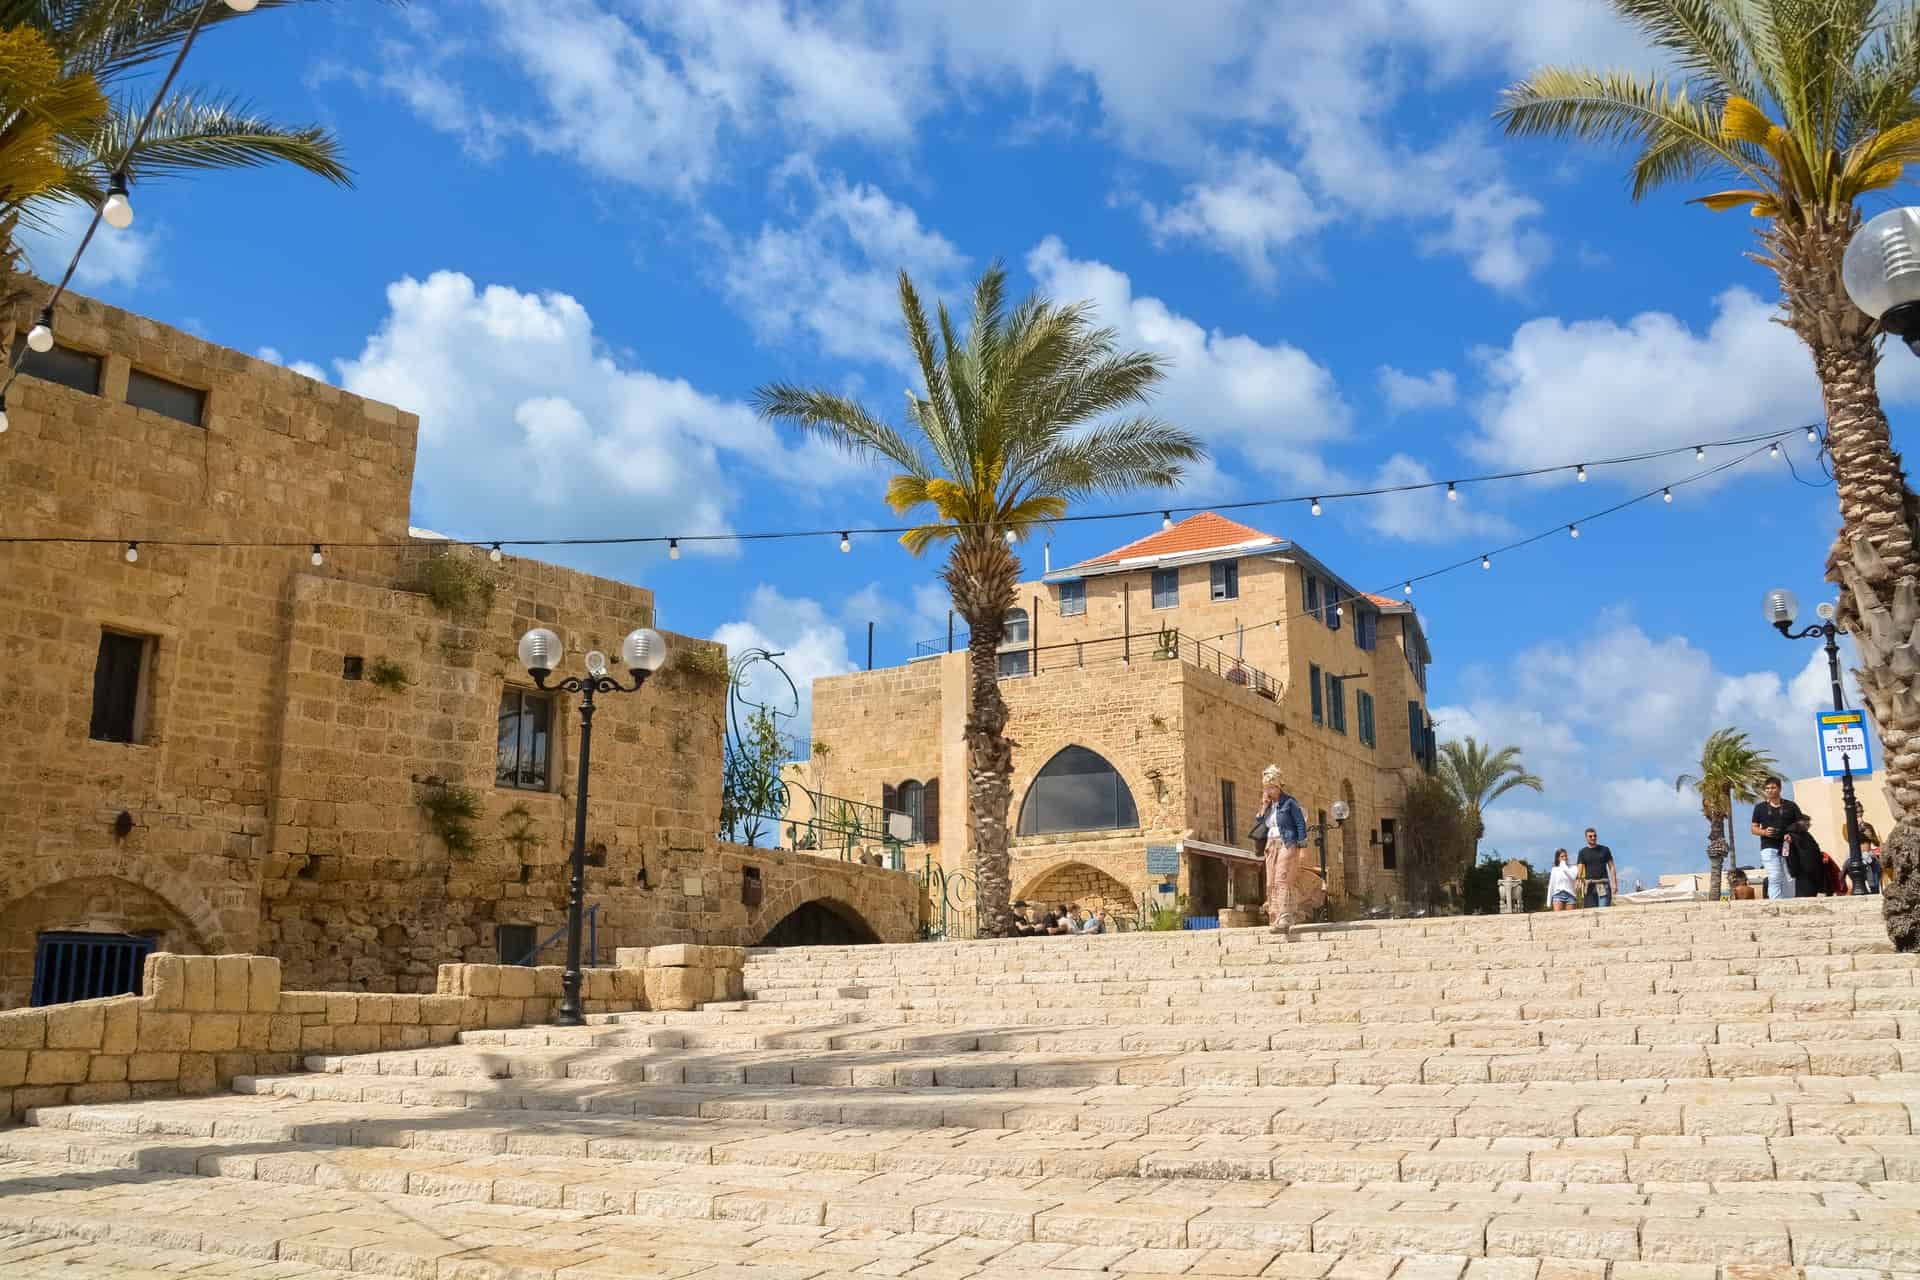 Best things to do in Tel Aviv Israel - Mark Gordon - Old buildings and steps in Jaffa by Jeremy Bezanger on Unsplash